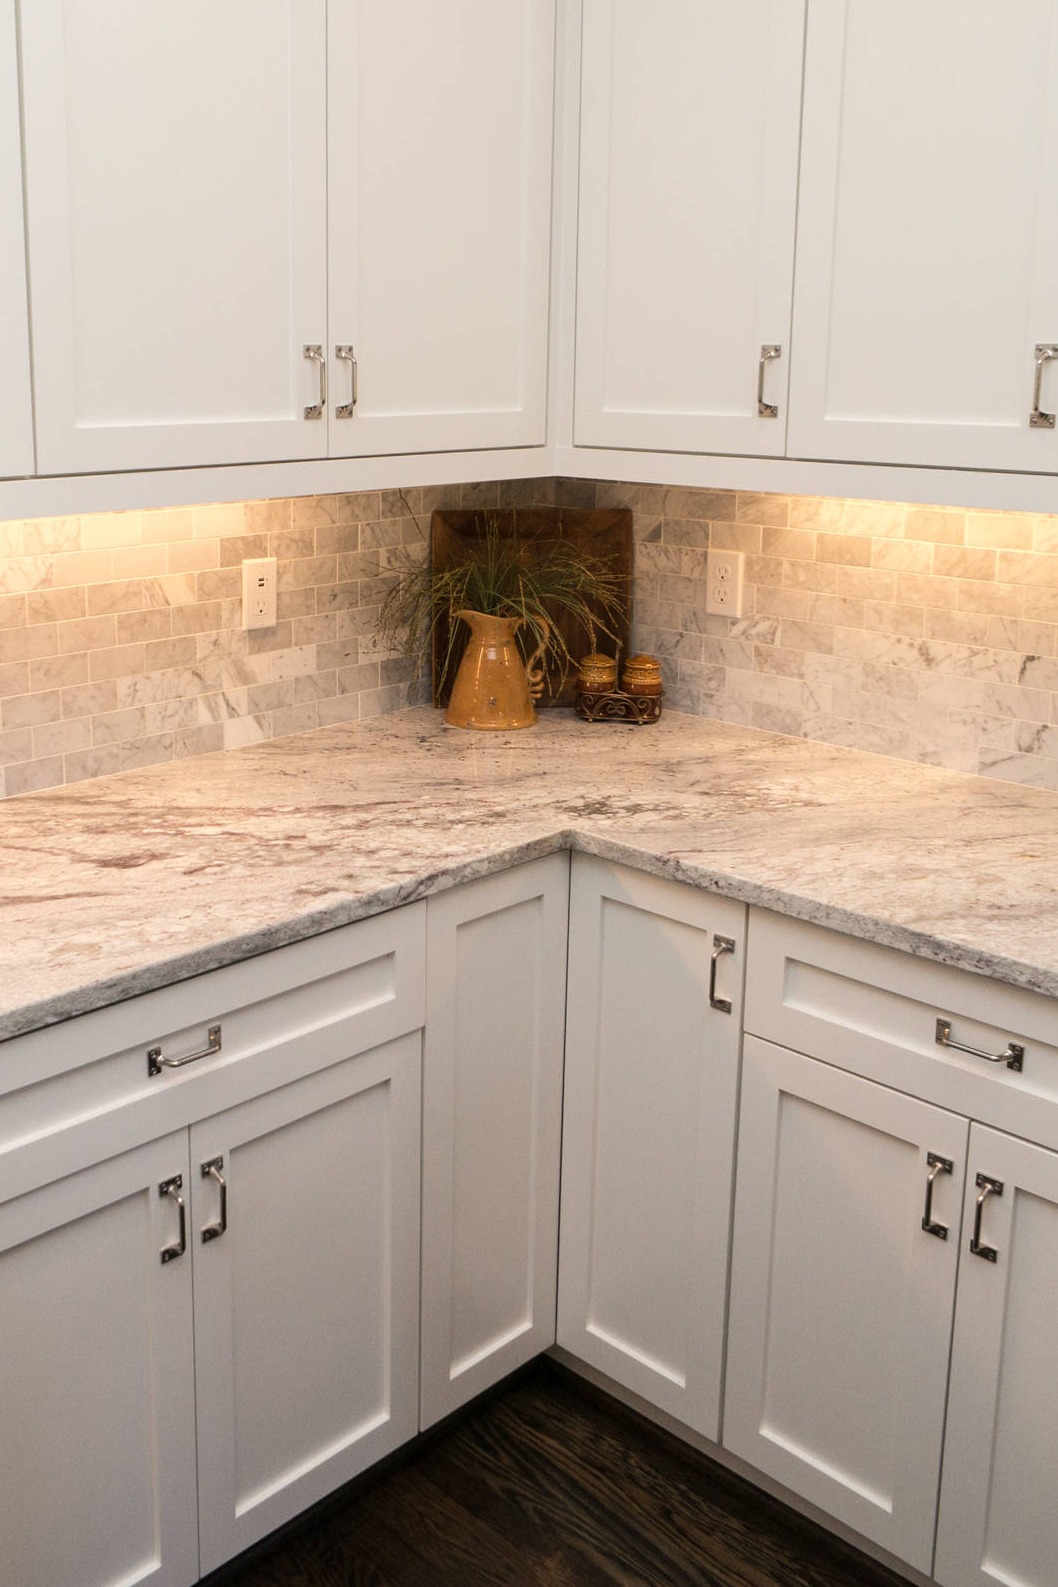 Glacier White Granite Countertops Cabinets Gray Marble Backsplash Tiles Dark Hardwood